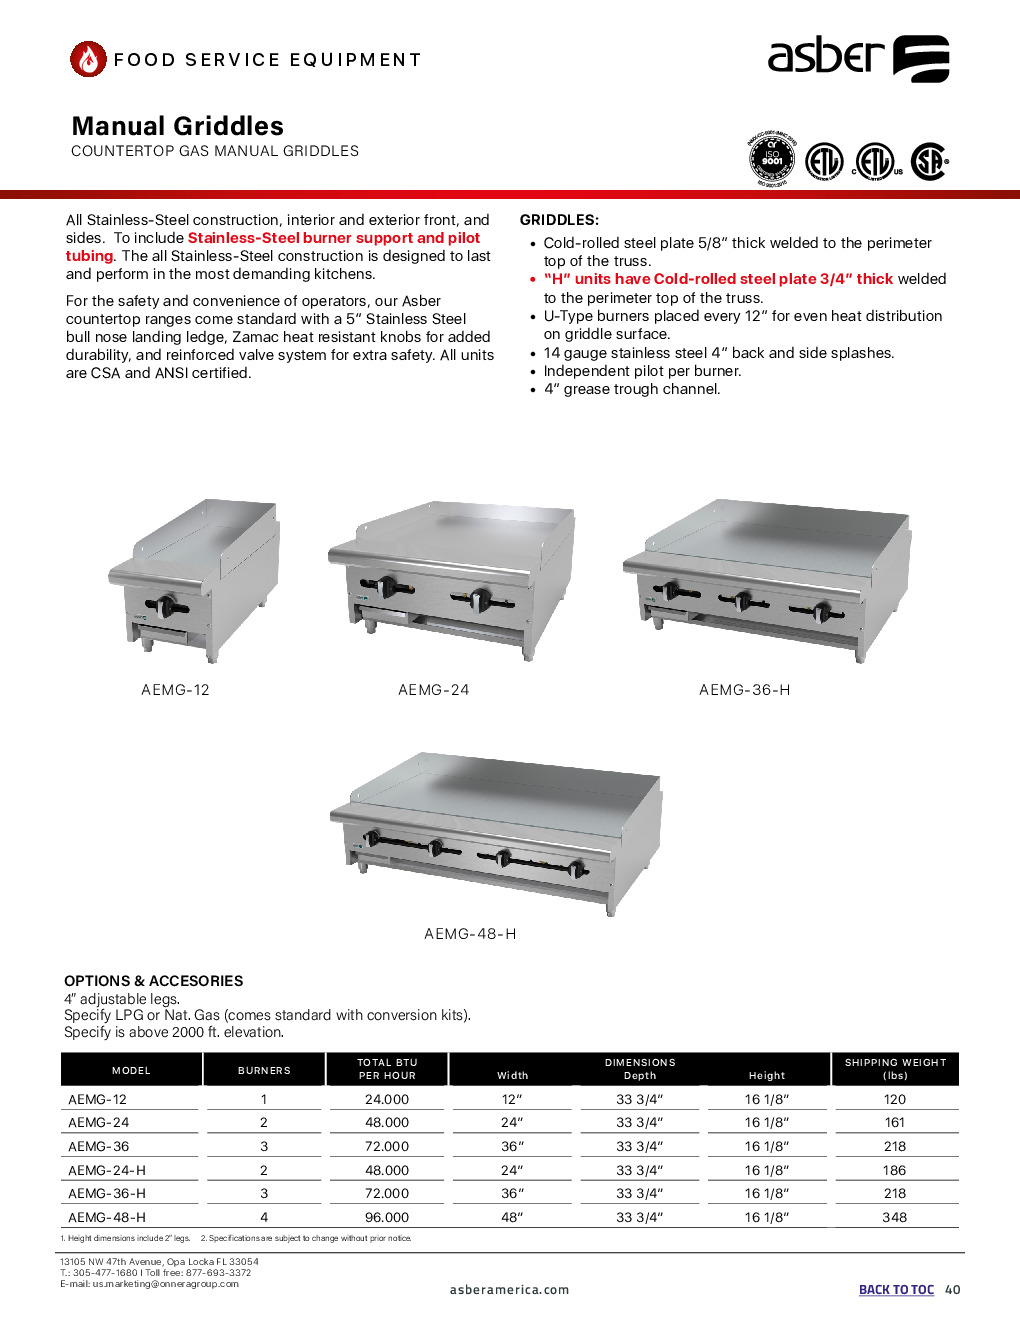 Asber AEMG-48-H Countertop Gas Manual Griddle, 4 x 24,000 BTU - 48